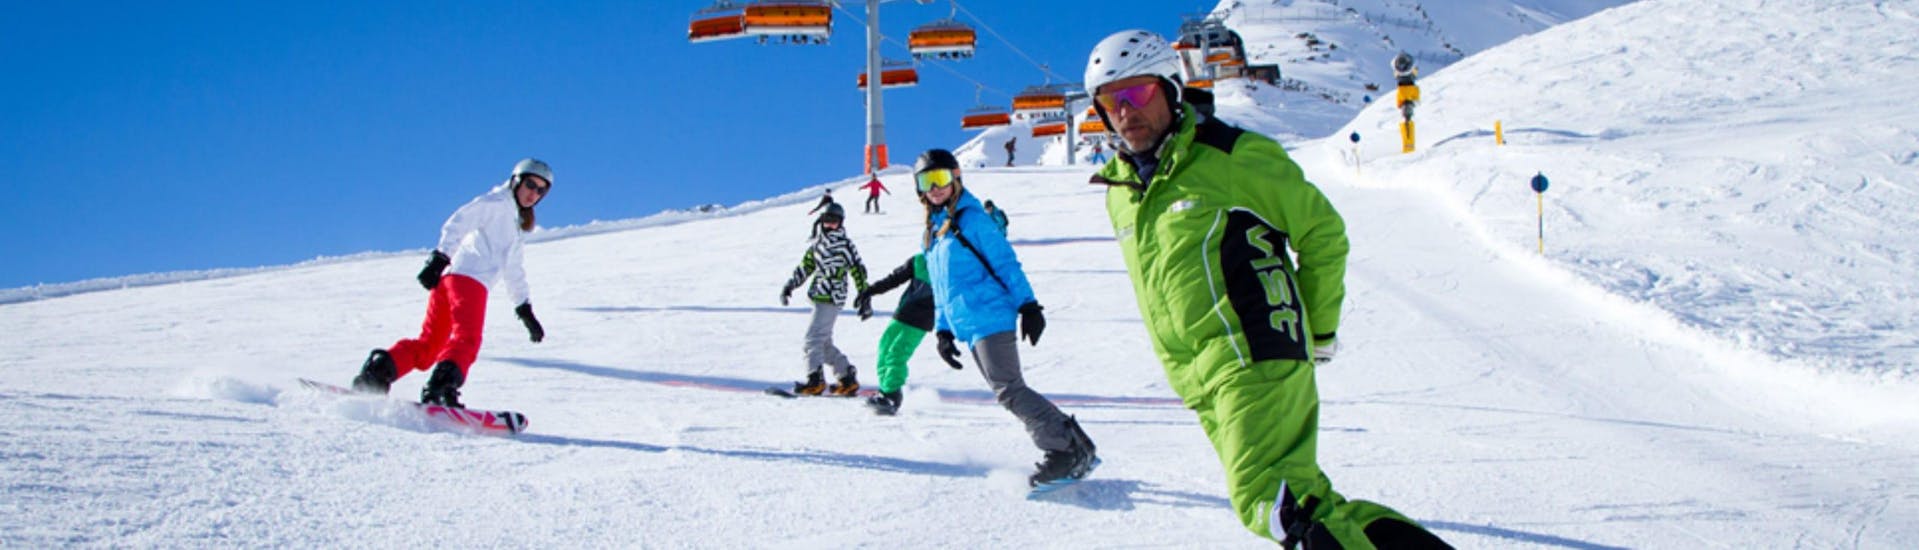 Lezioni private di Snowboard a partire da 8 anni per tutti i livelli.